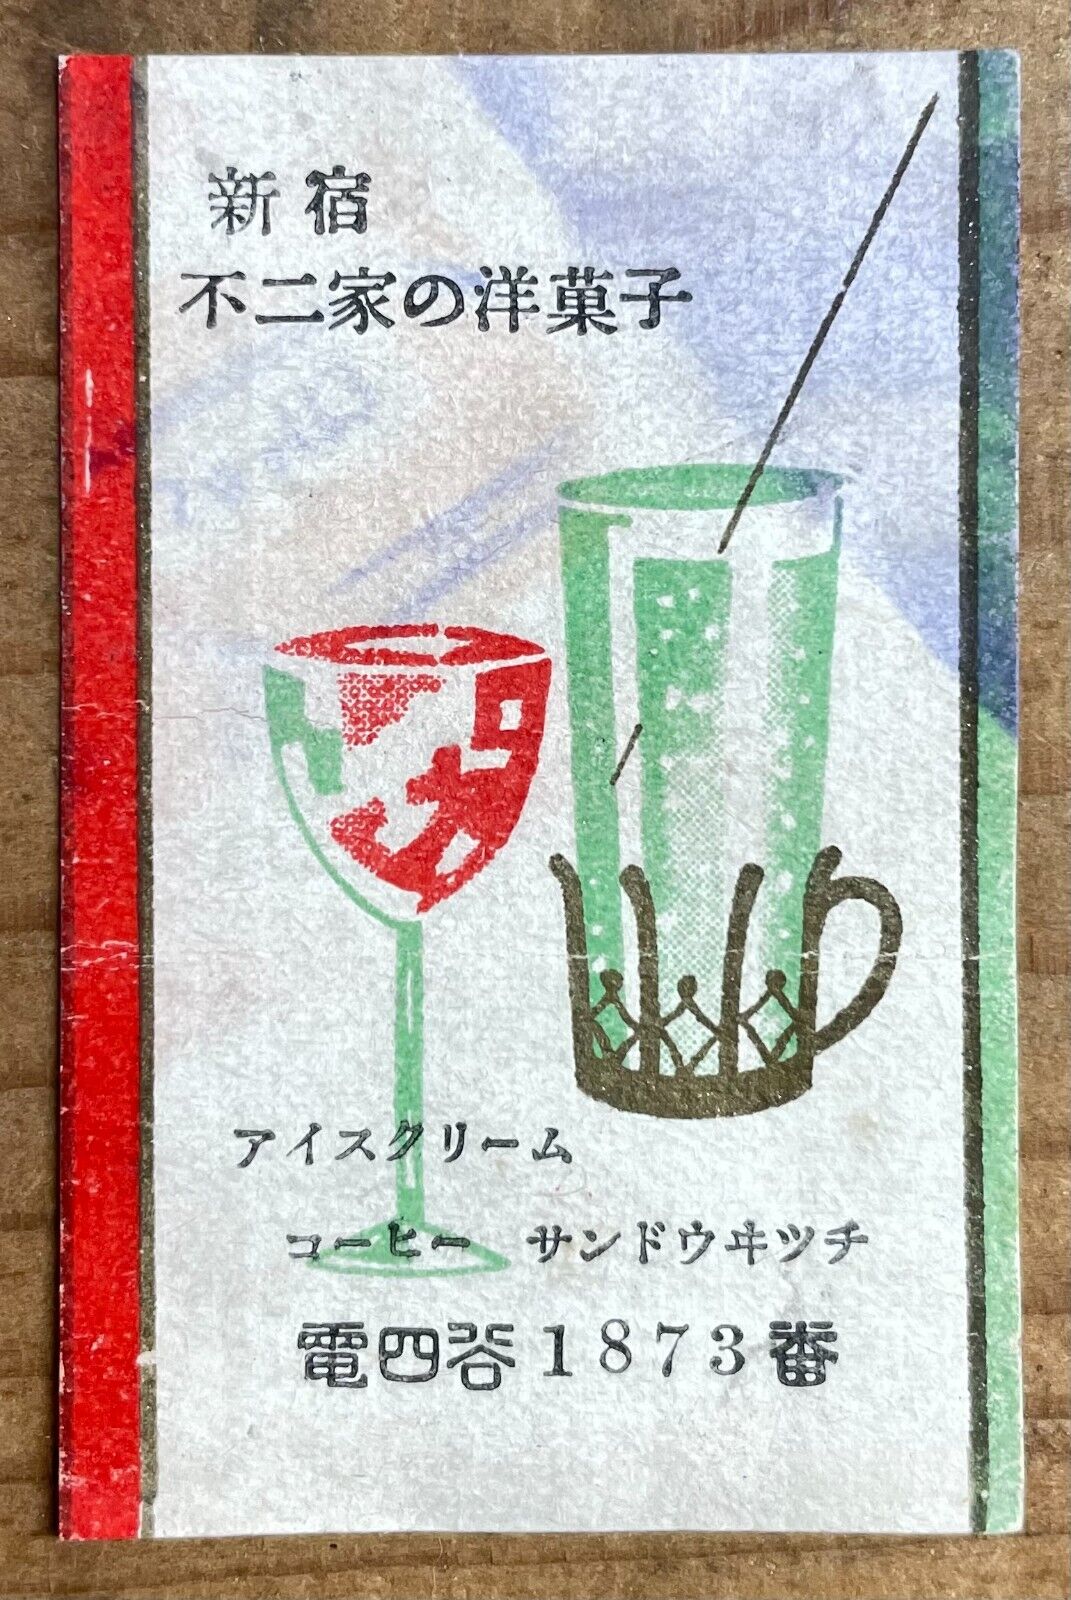 Old matchbox label Japan ice cream sandwich drink shop Fujiya art vintage B4